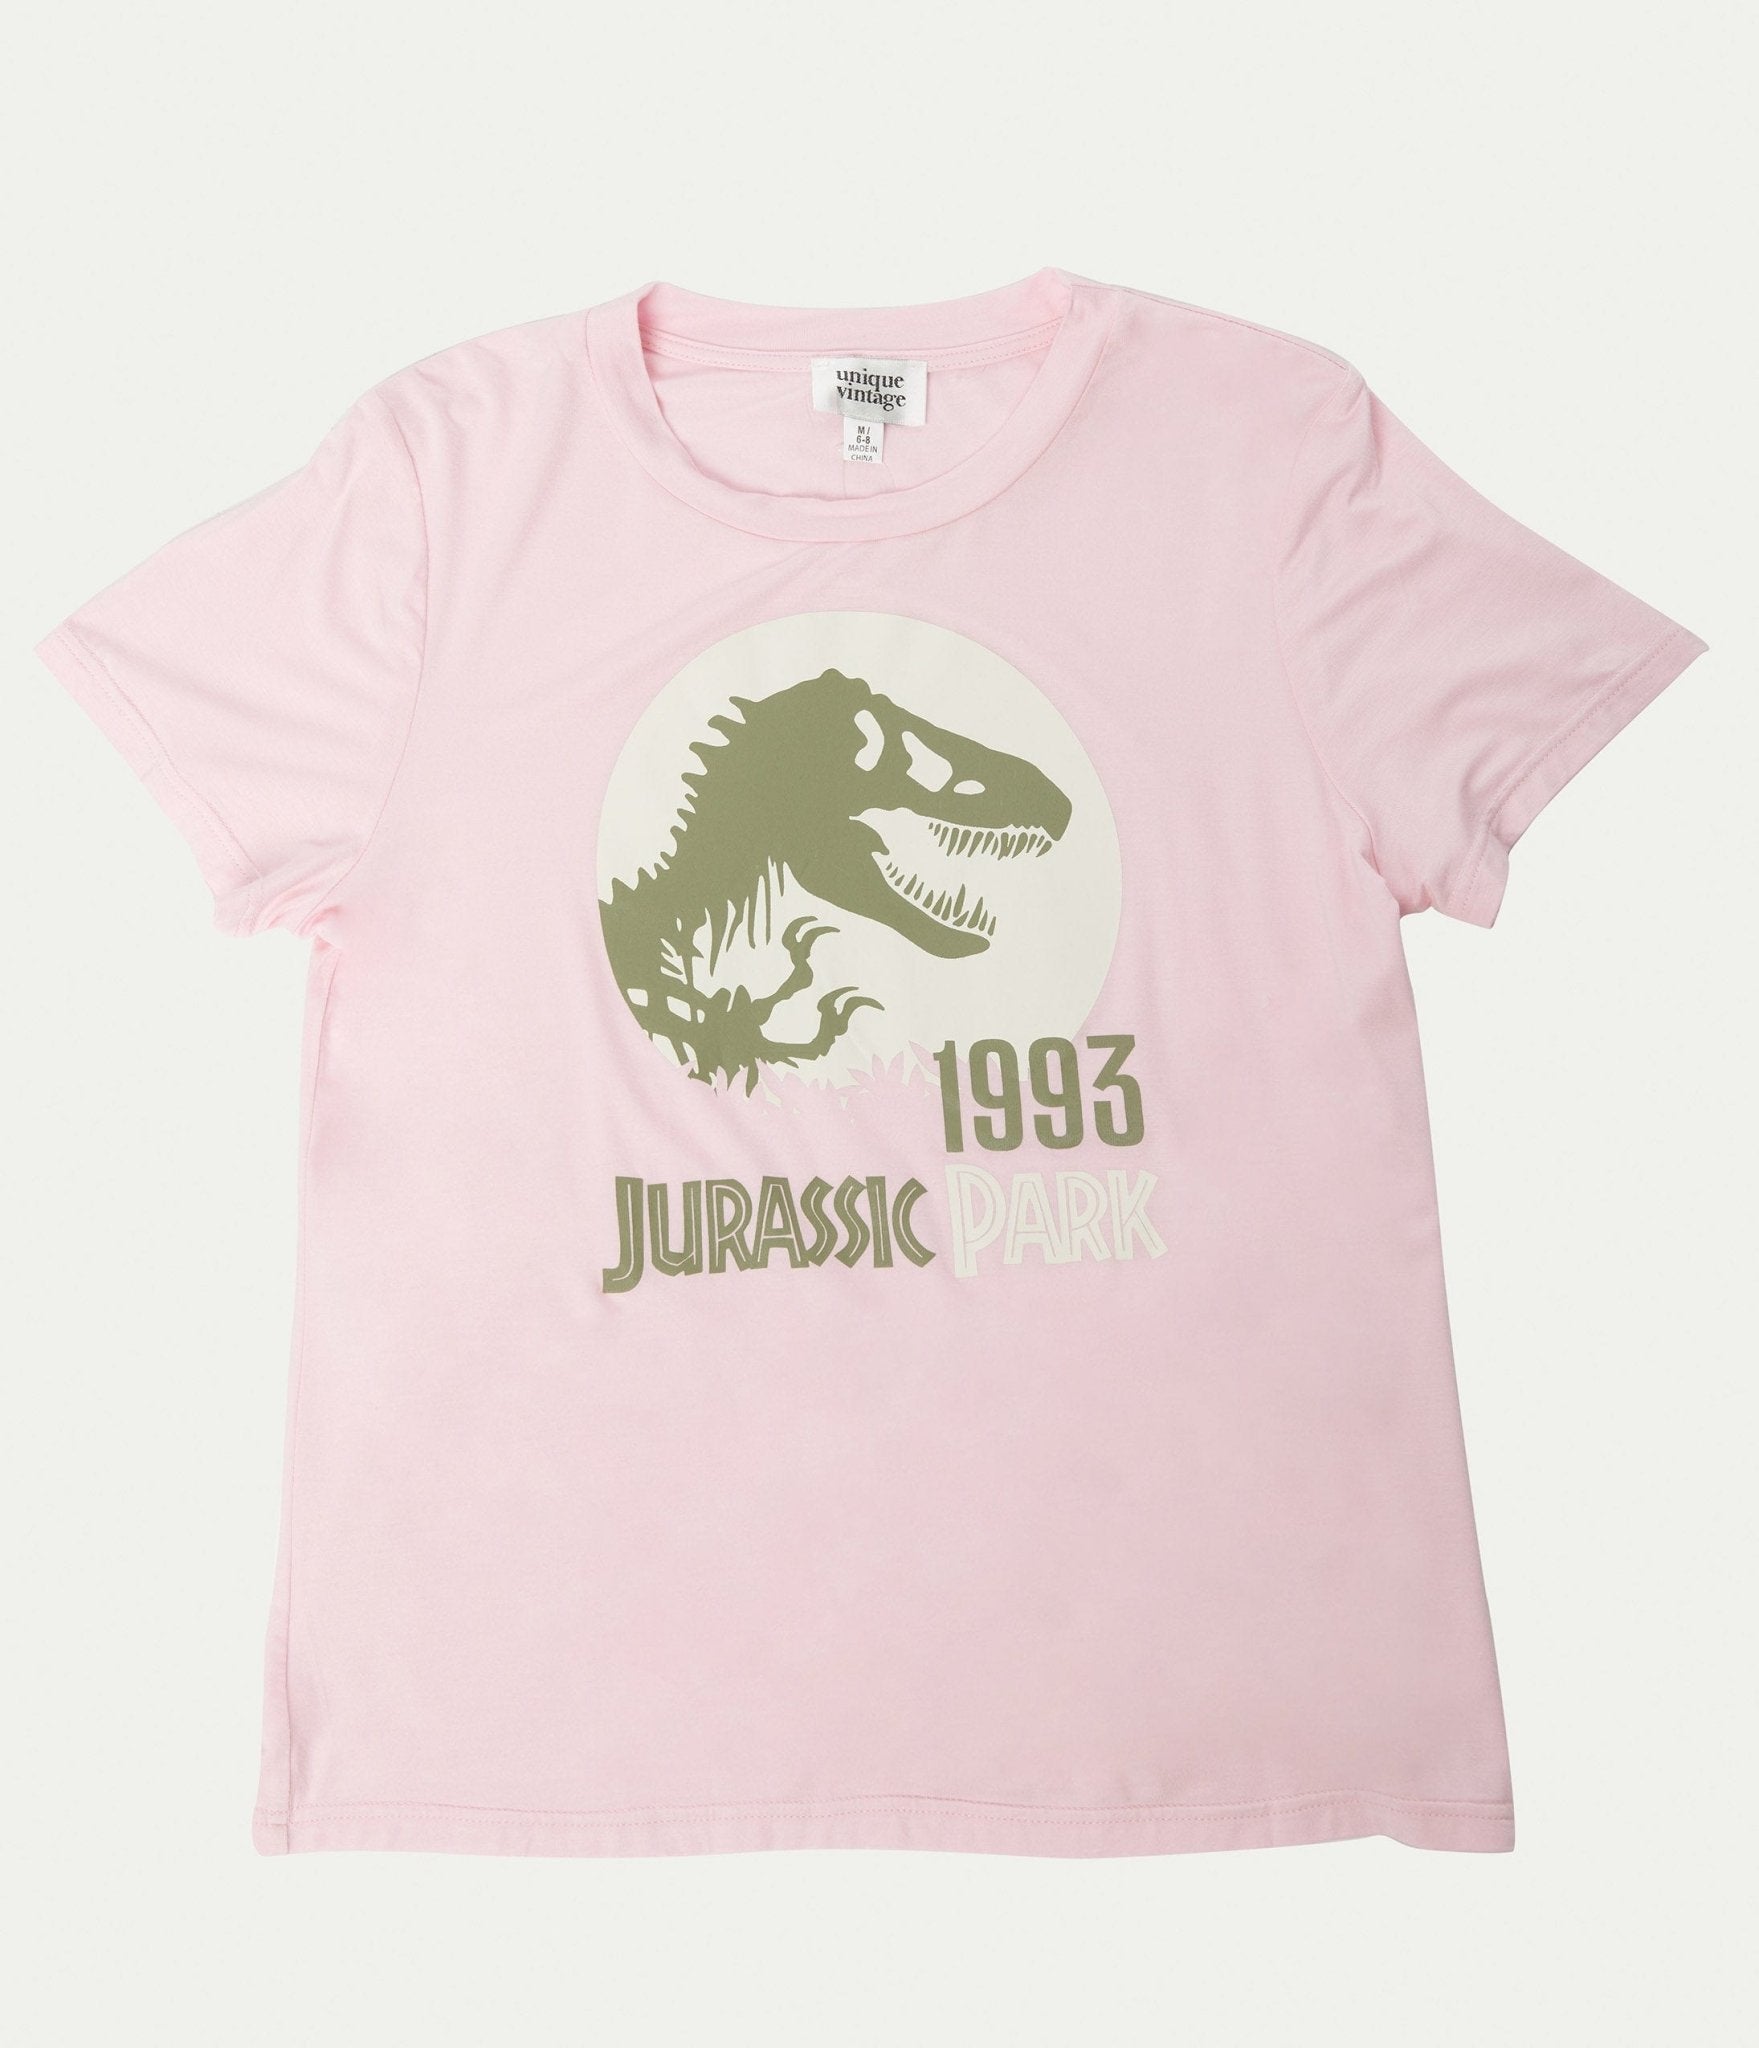 

Jurassic Park X Unique Vintage Light Pink Jurassic Park 93 Fitted Tee